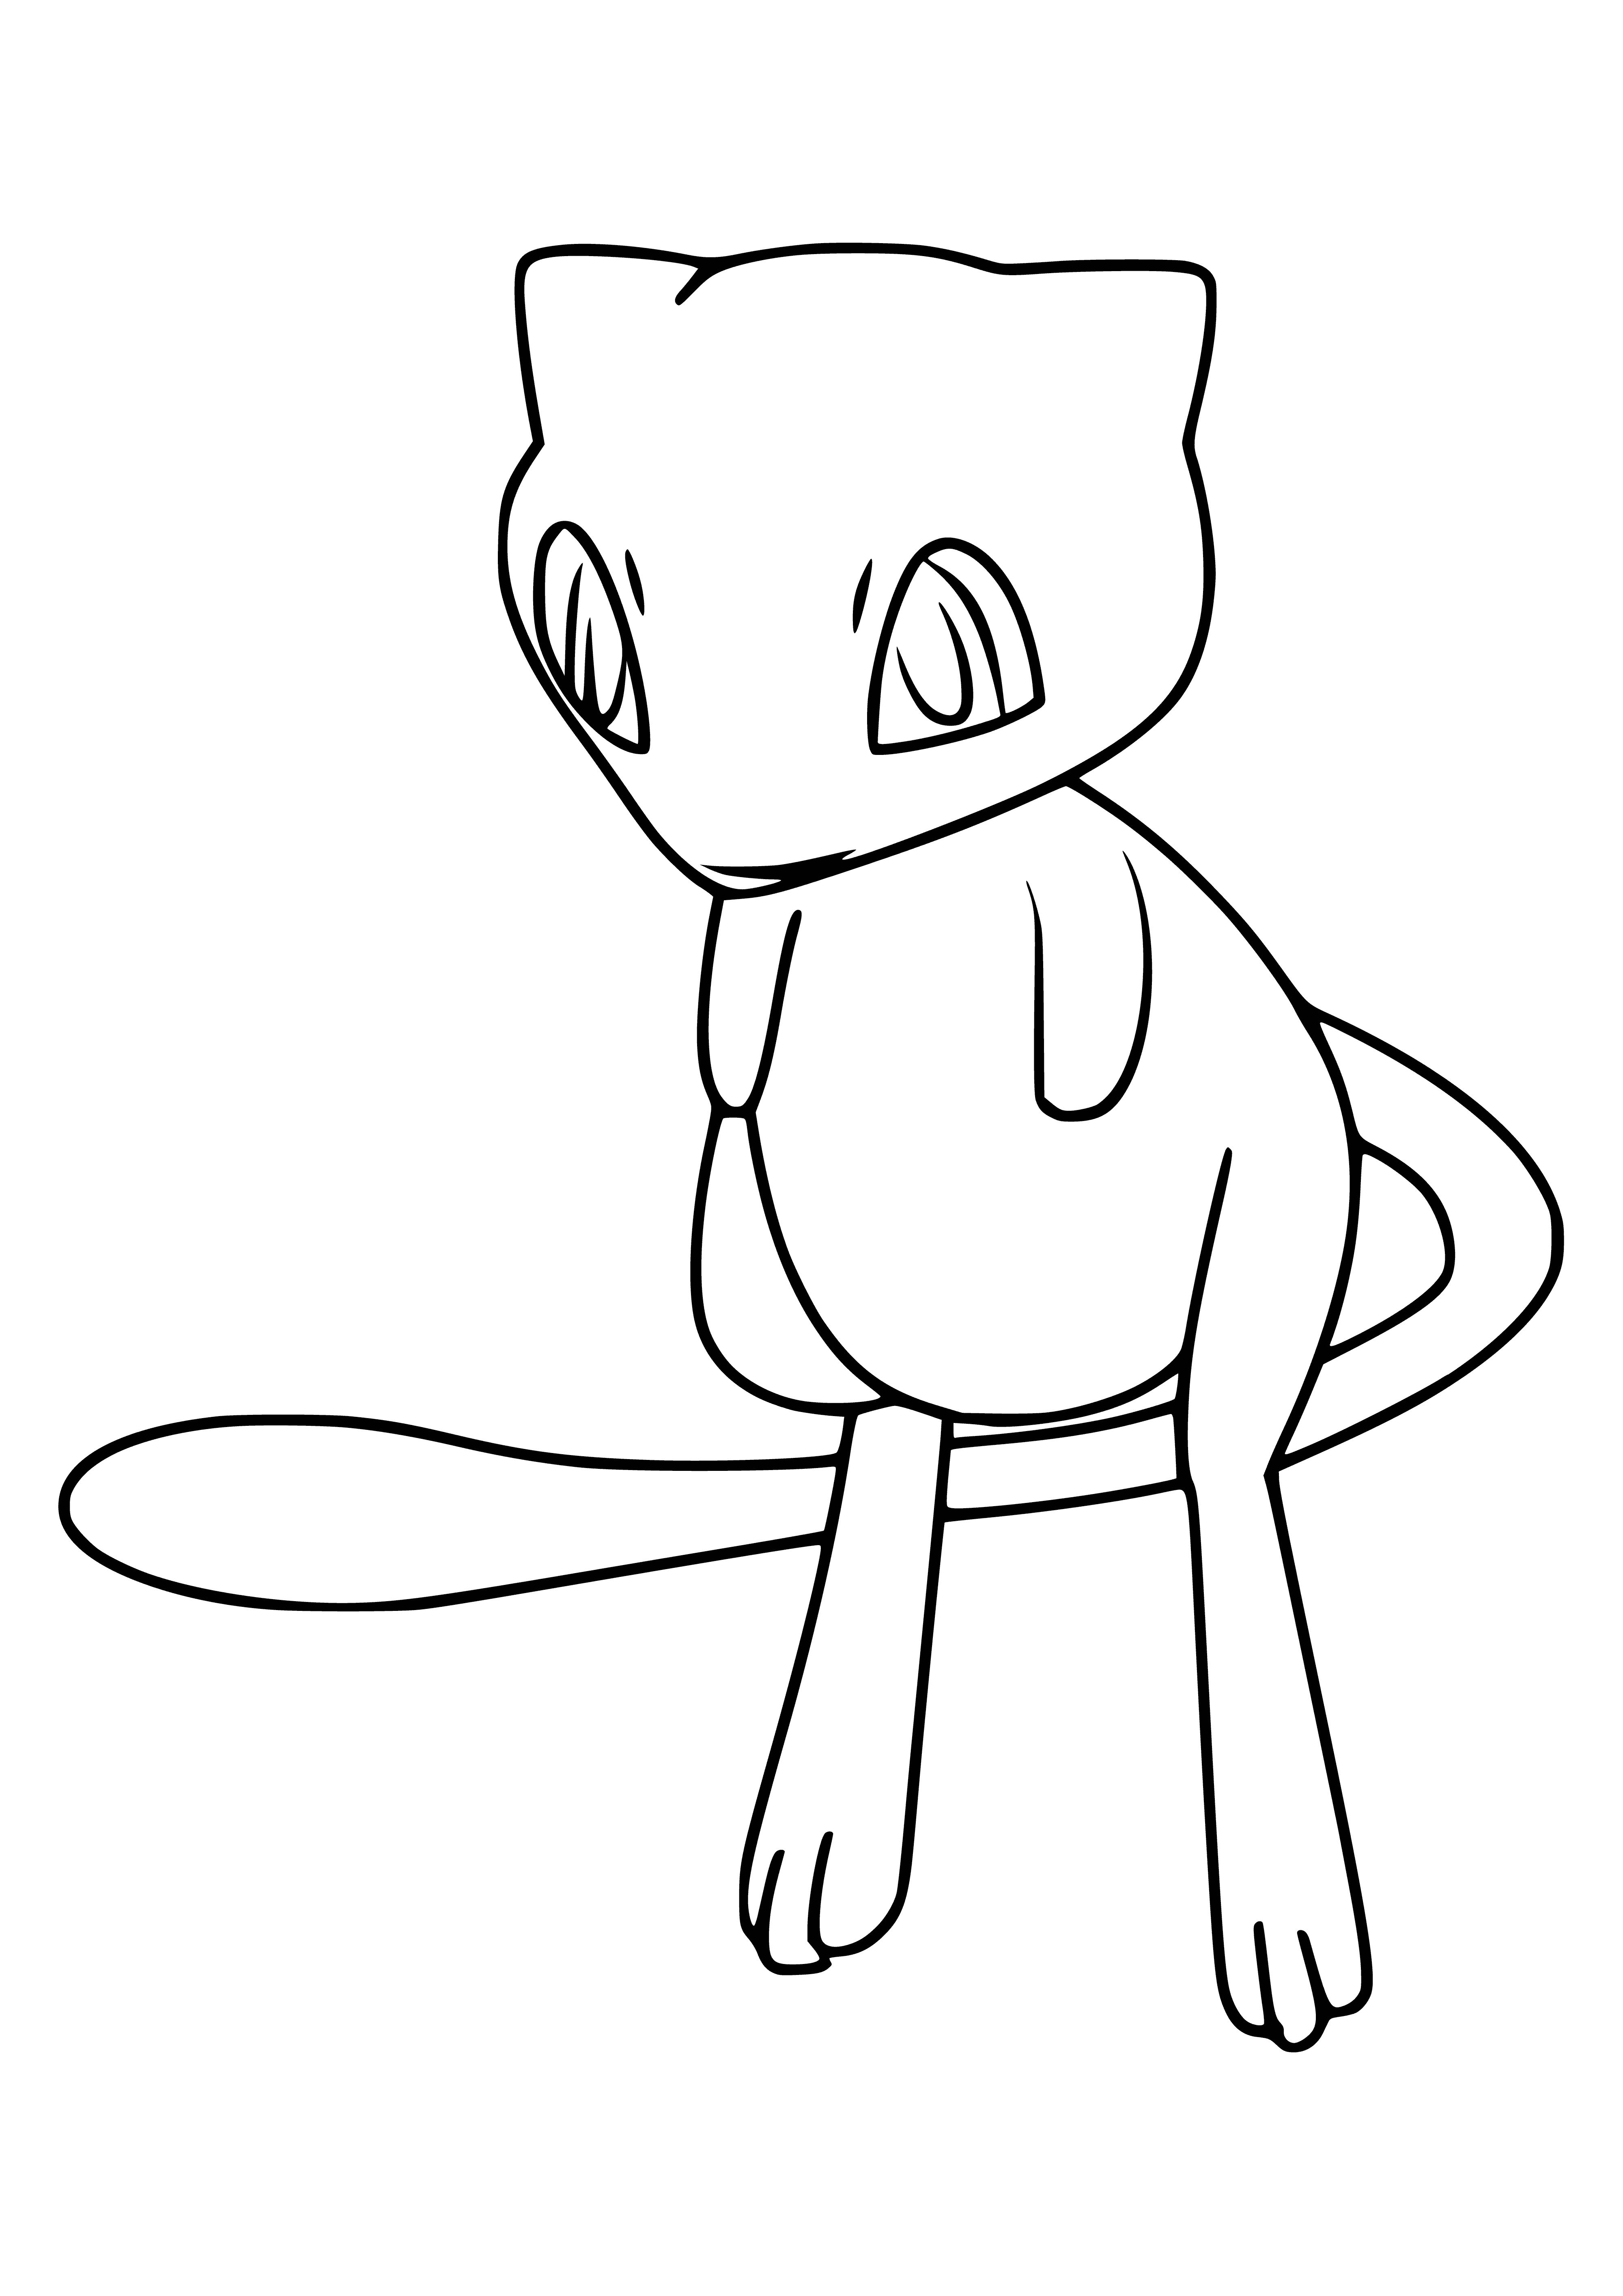 Legendary Pokemon Mew coloring page